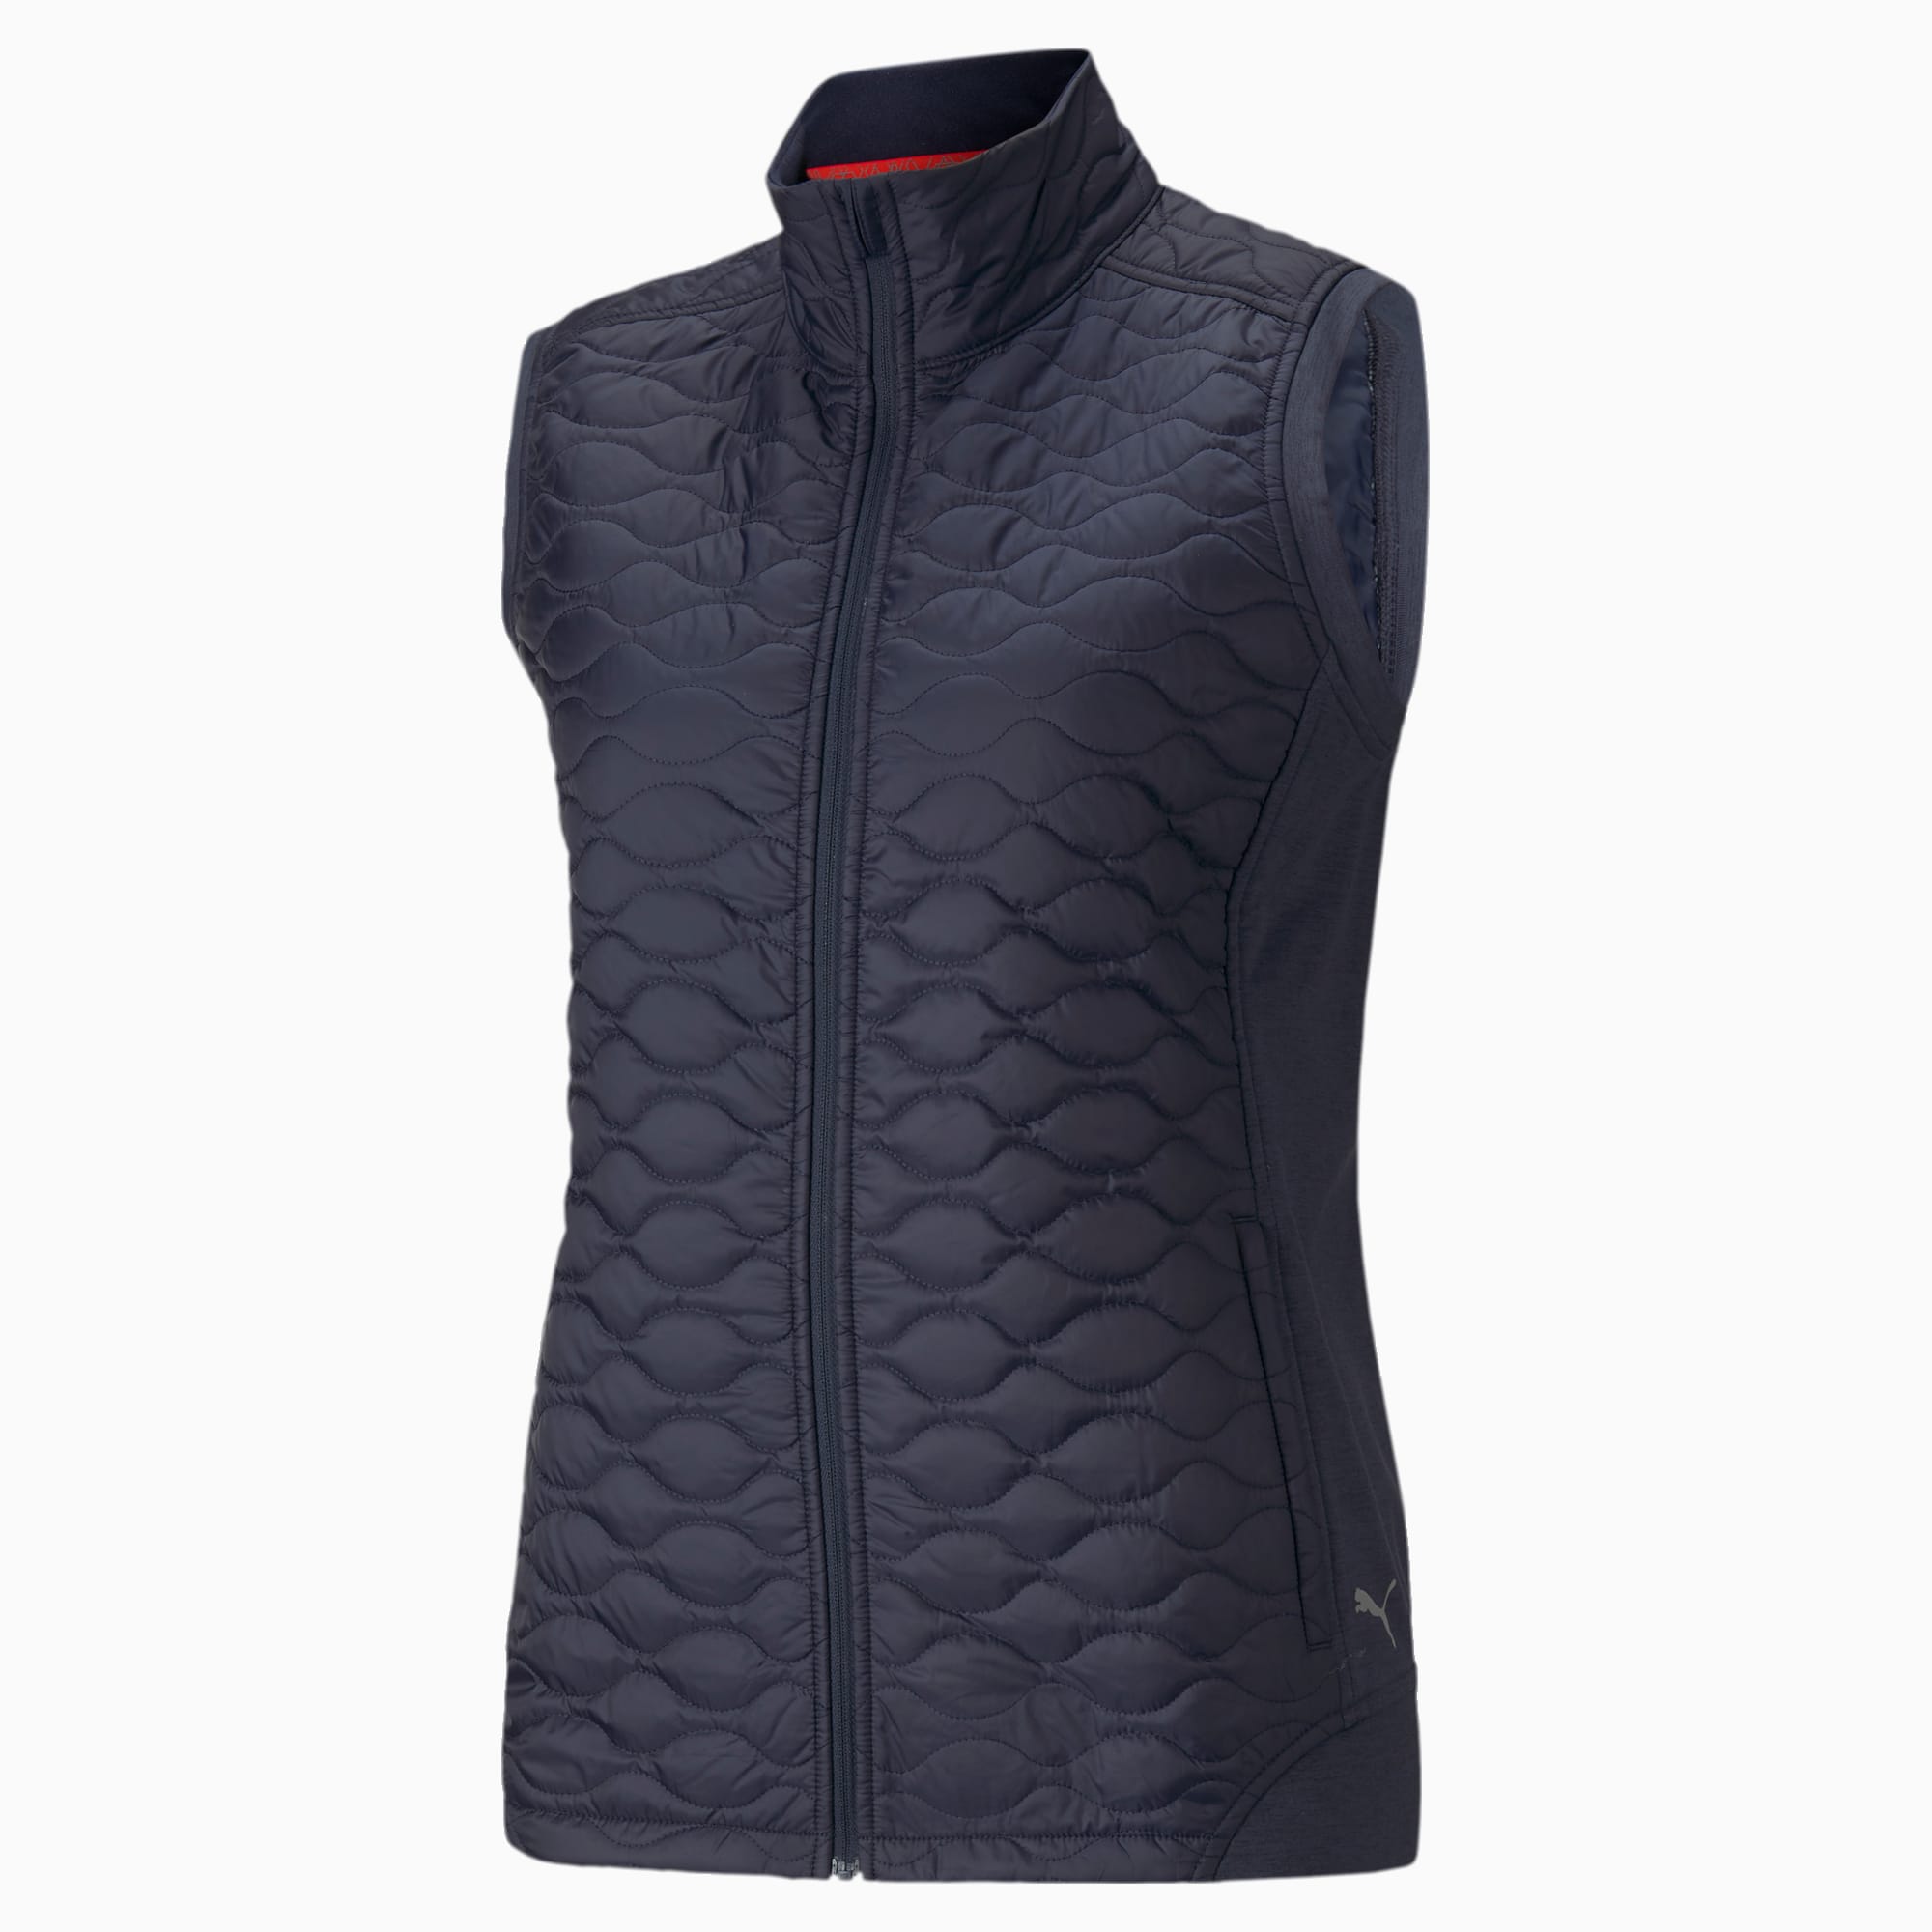 PUMA Cloudspun Wrmlbl Women's Golf Vest Women's Jacket, Dark Blue, Size L, Clothing